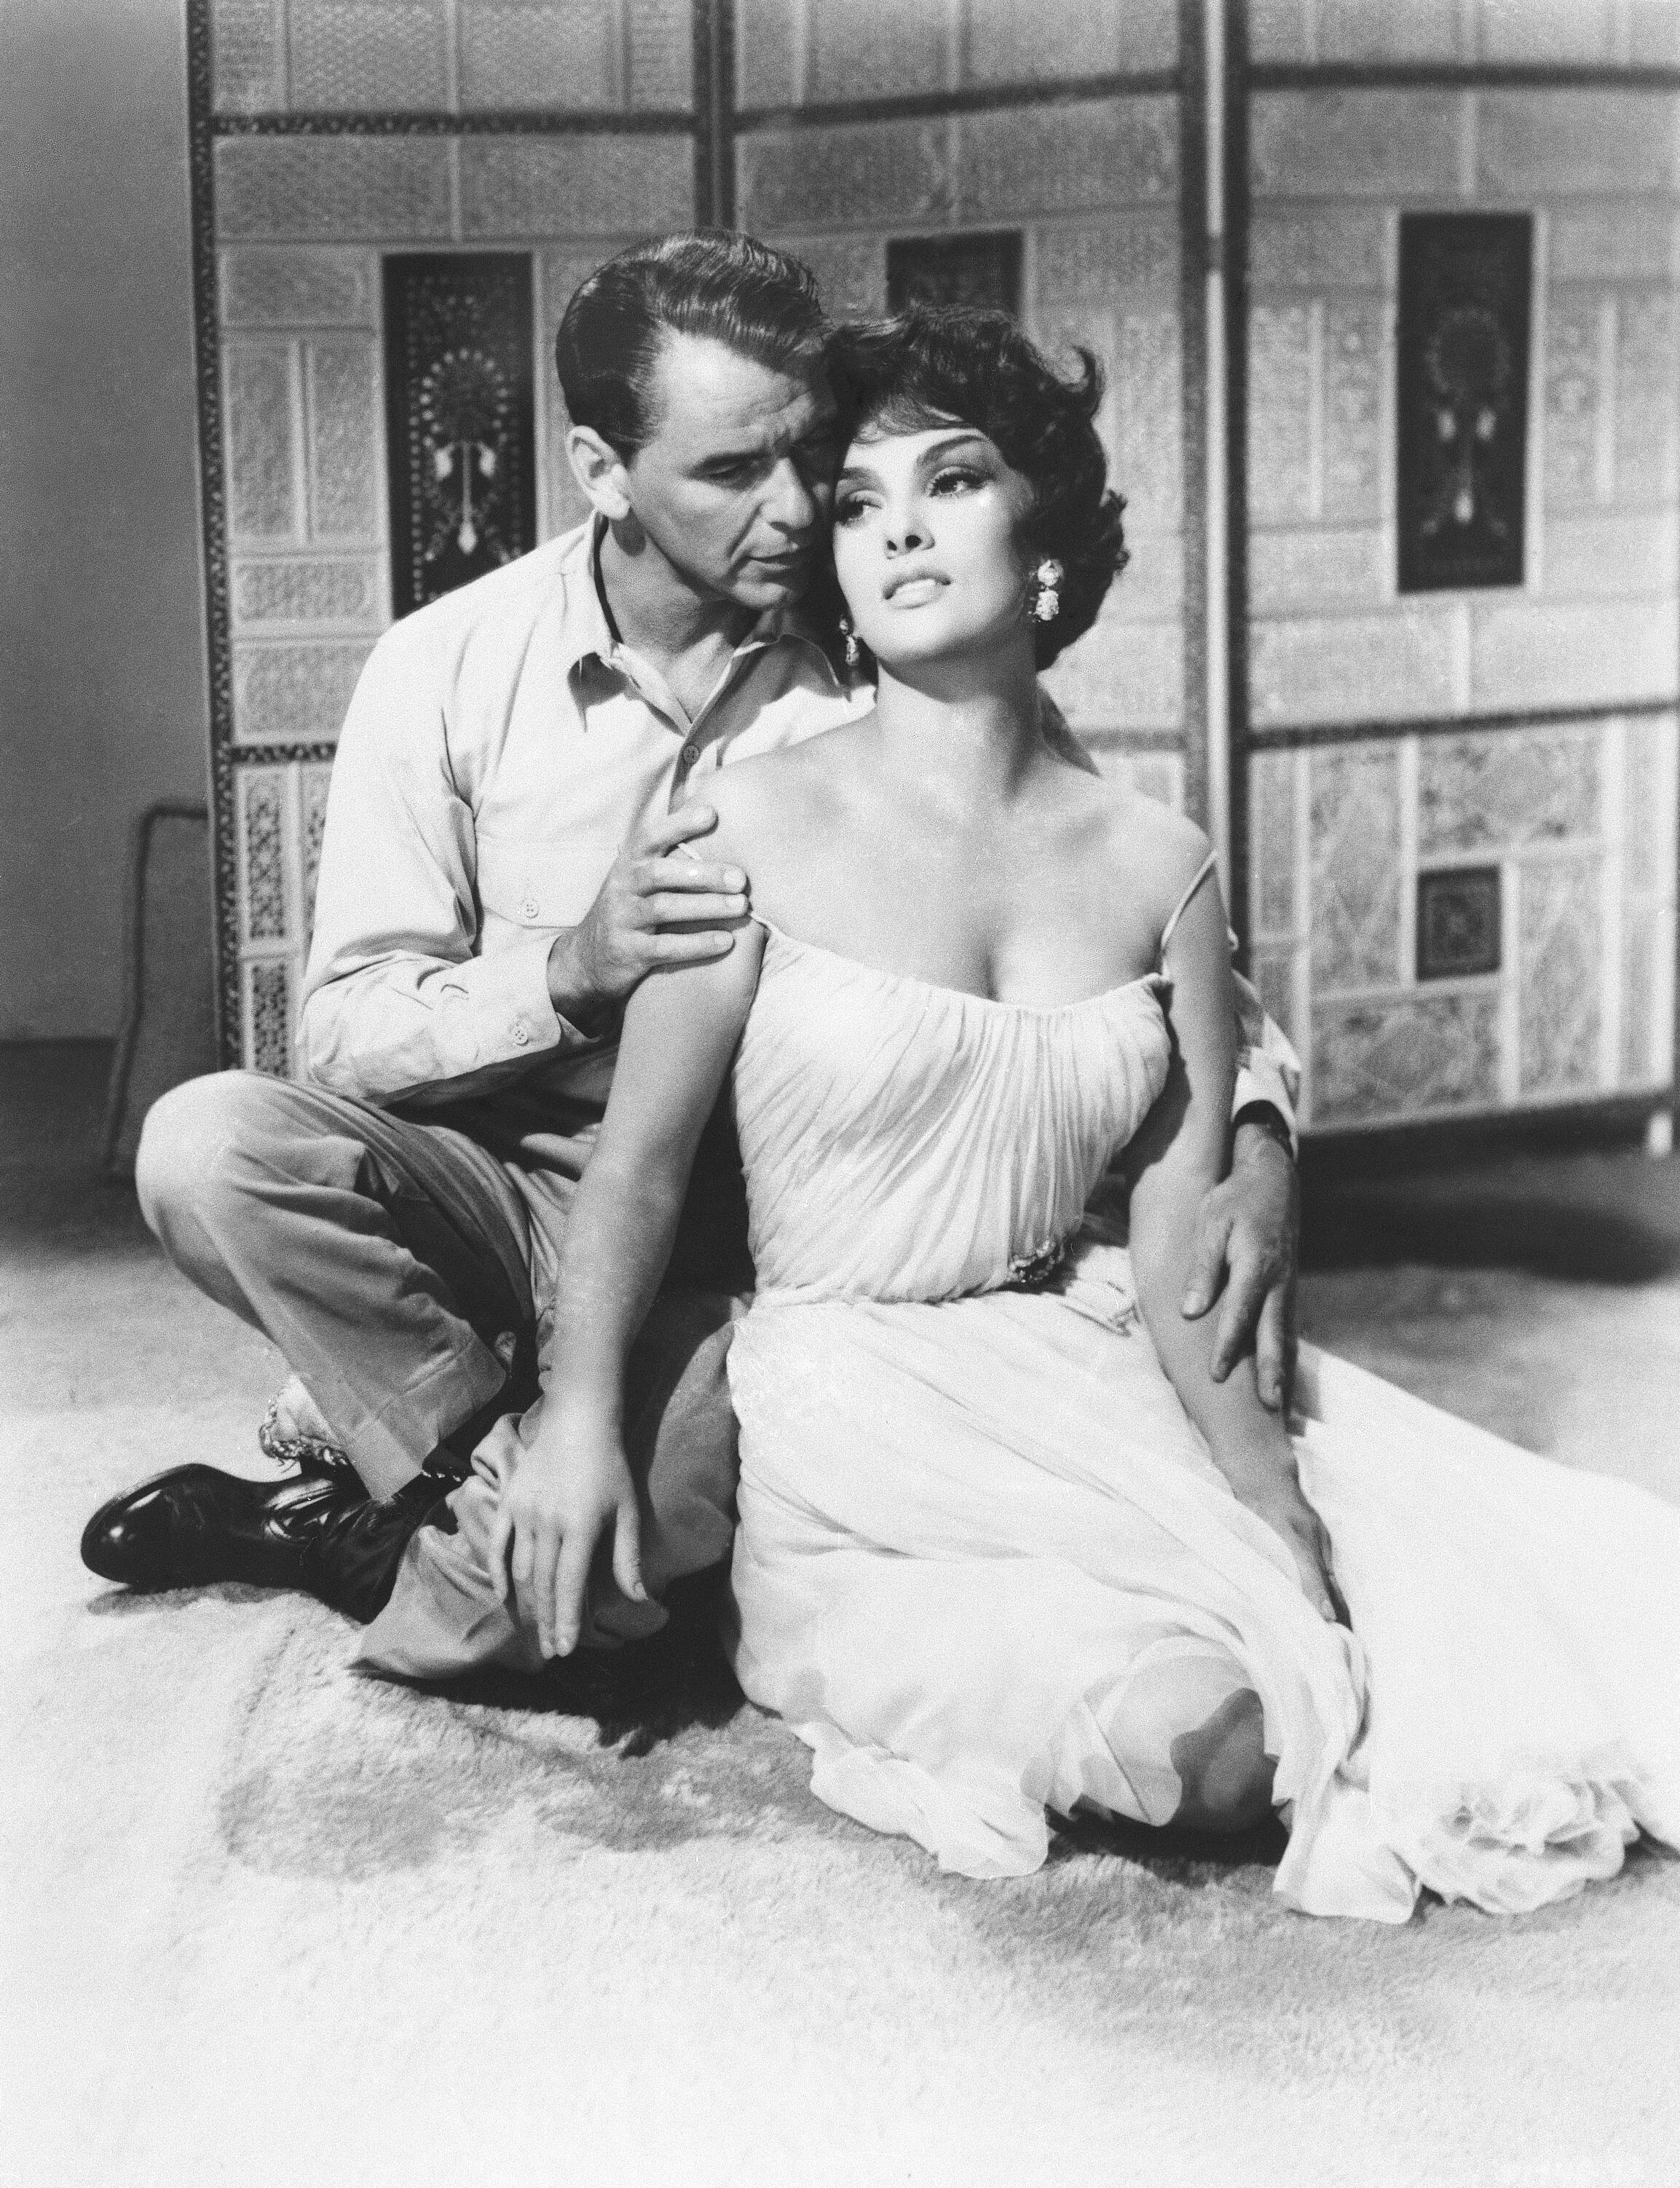 Lollobrigida co-starred alongside crooner Frank Sinatra in the 1959 film Never So Few